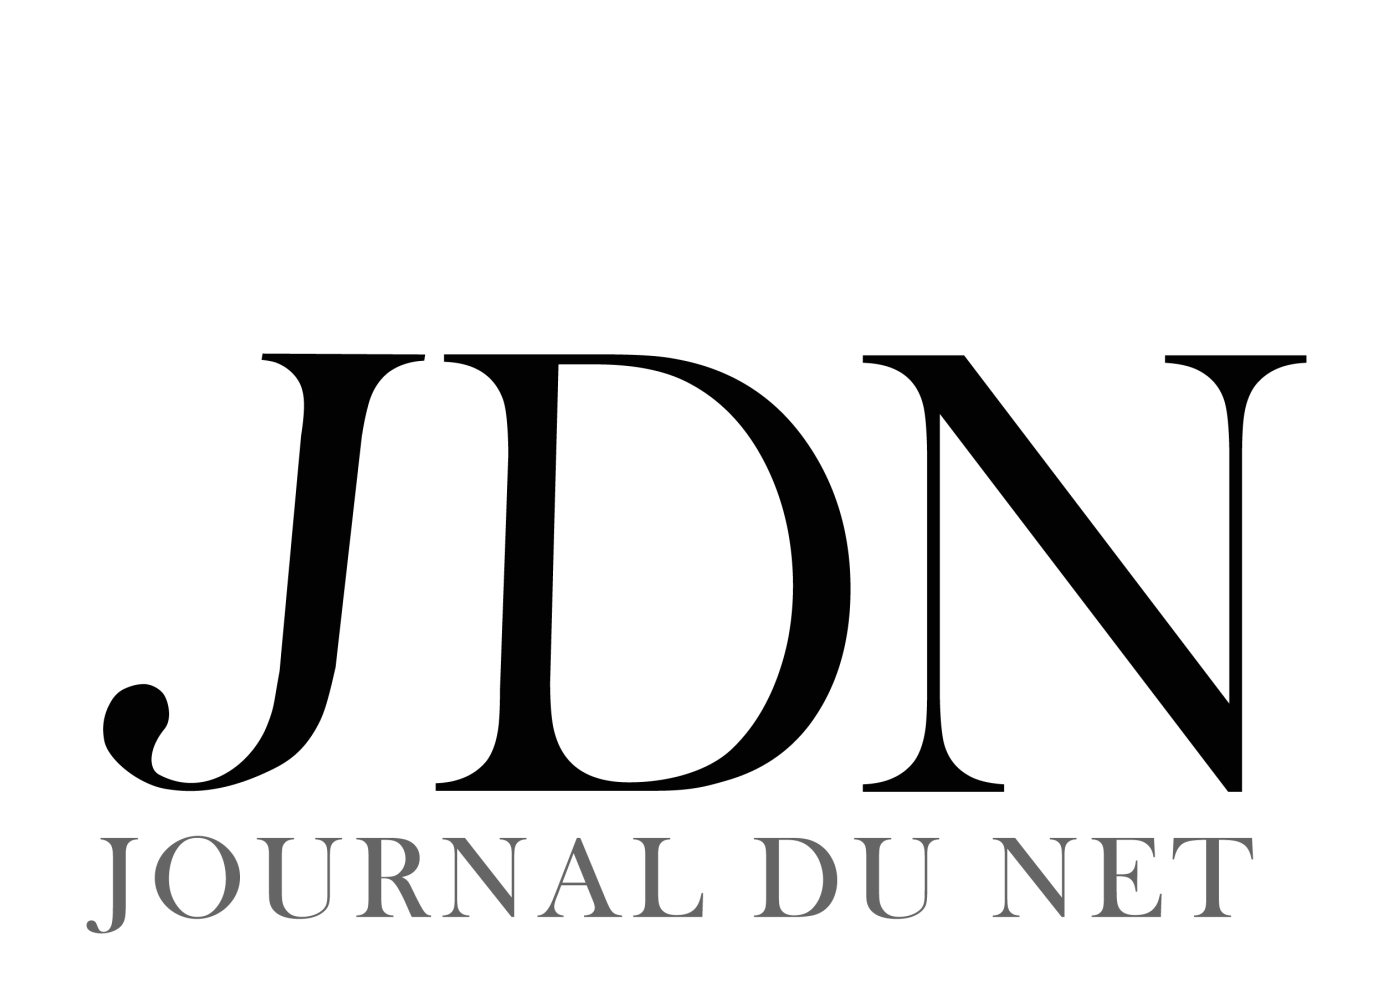 logo-jdn